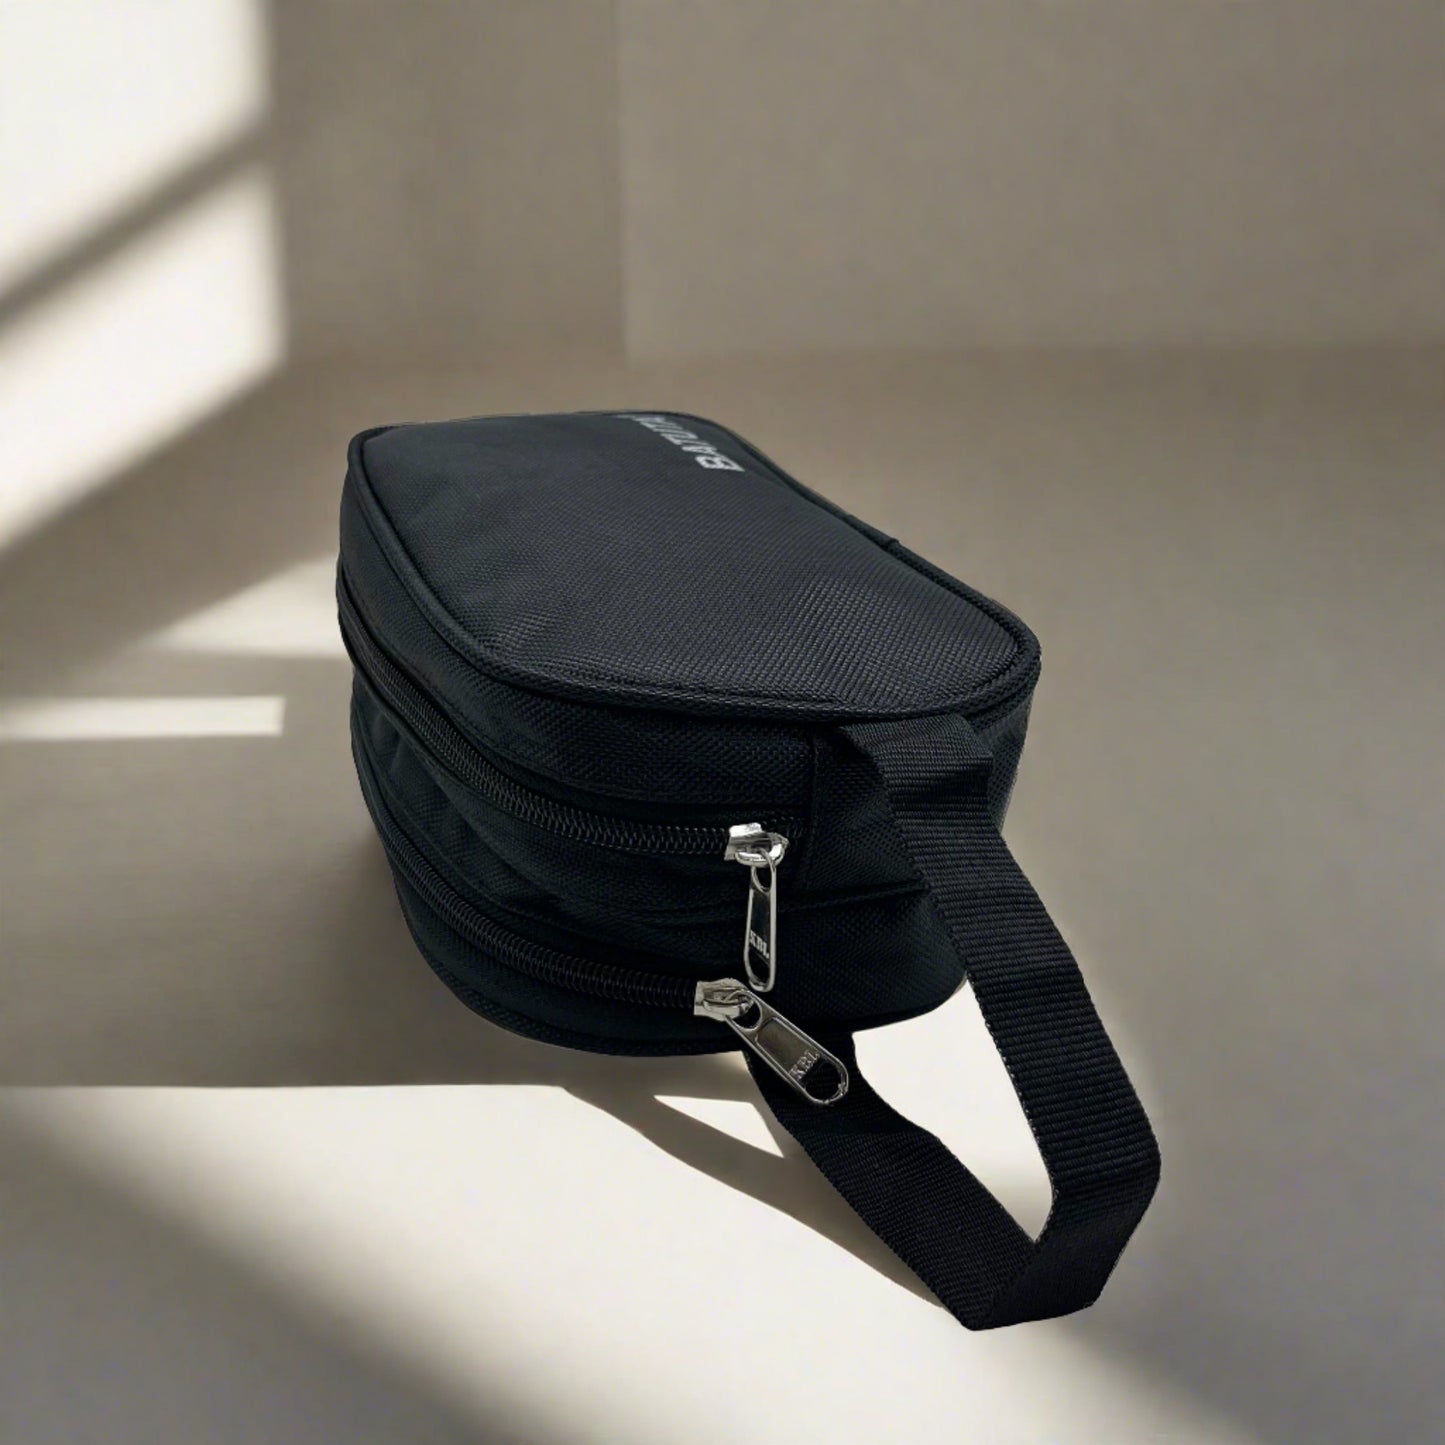 BATUTA HUB - Multipurpose travel makeup kit pouch medicin organizer bag storage pouch Travel Shaving Kit & Bag